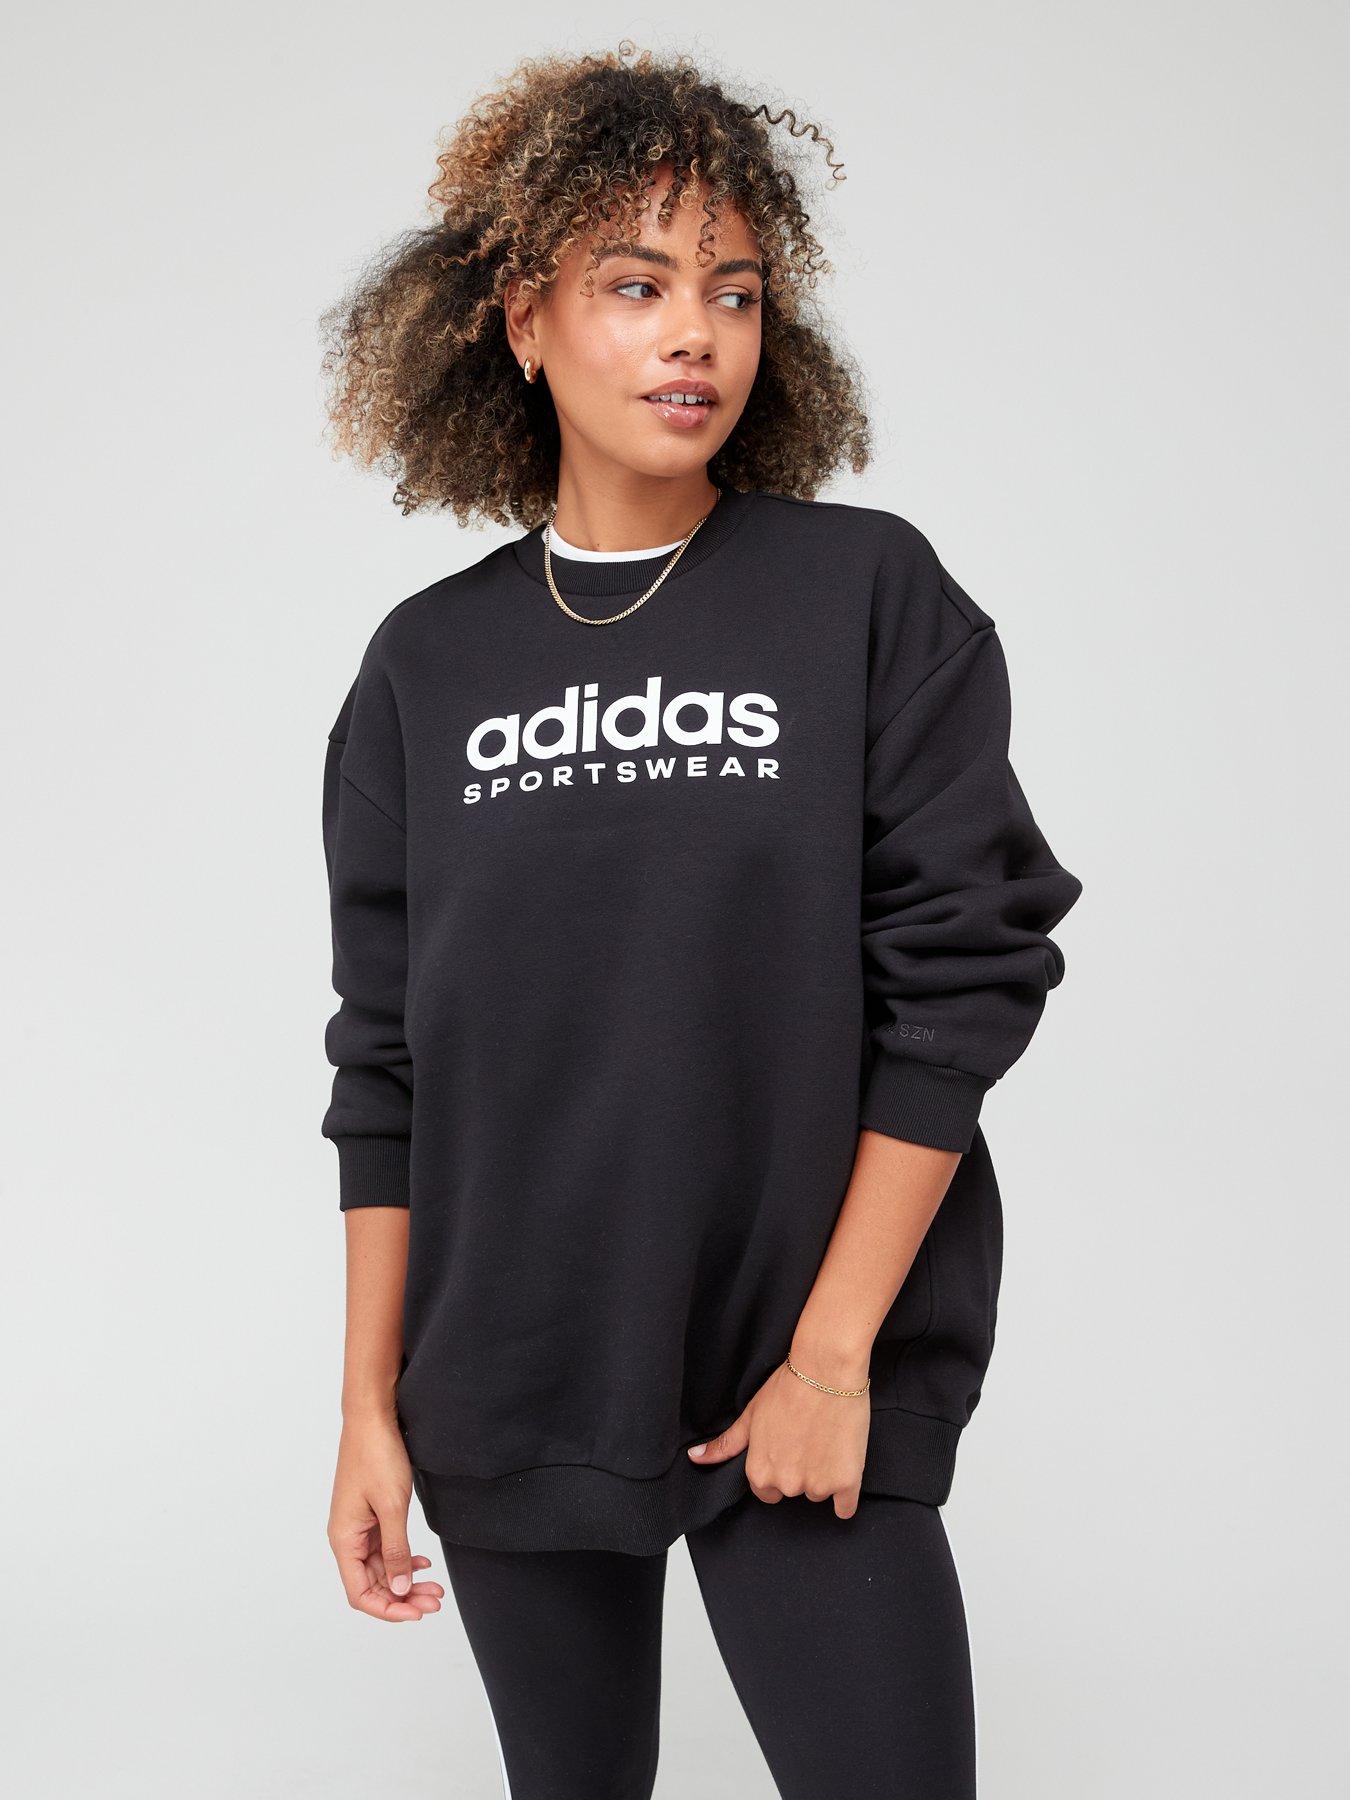 adidas Sportswear All Szn Black - Graphic Fleece Sweatshirt